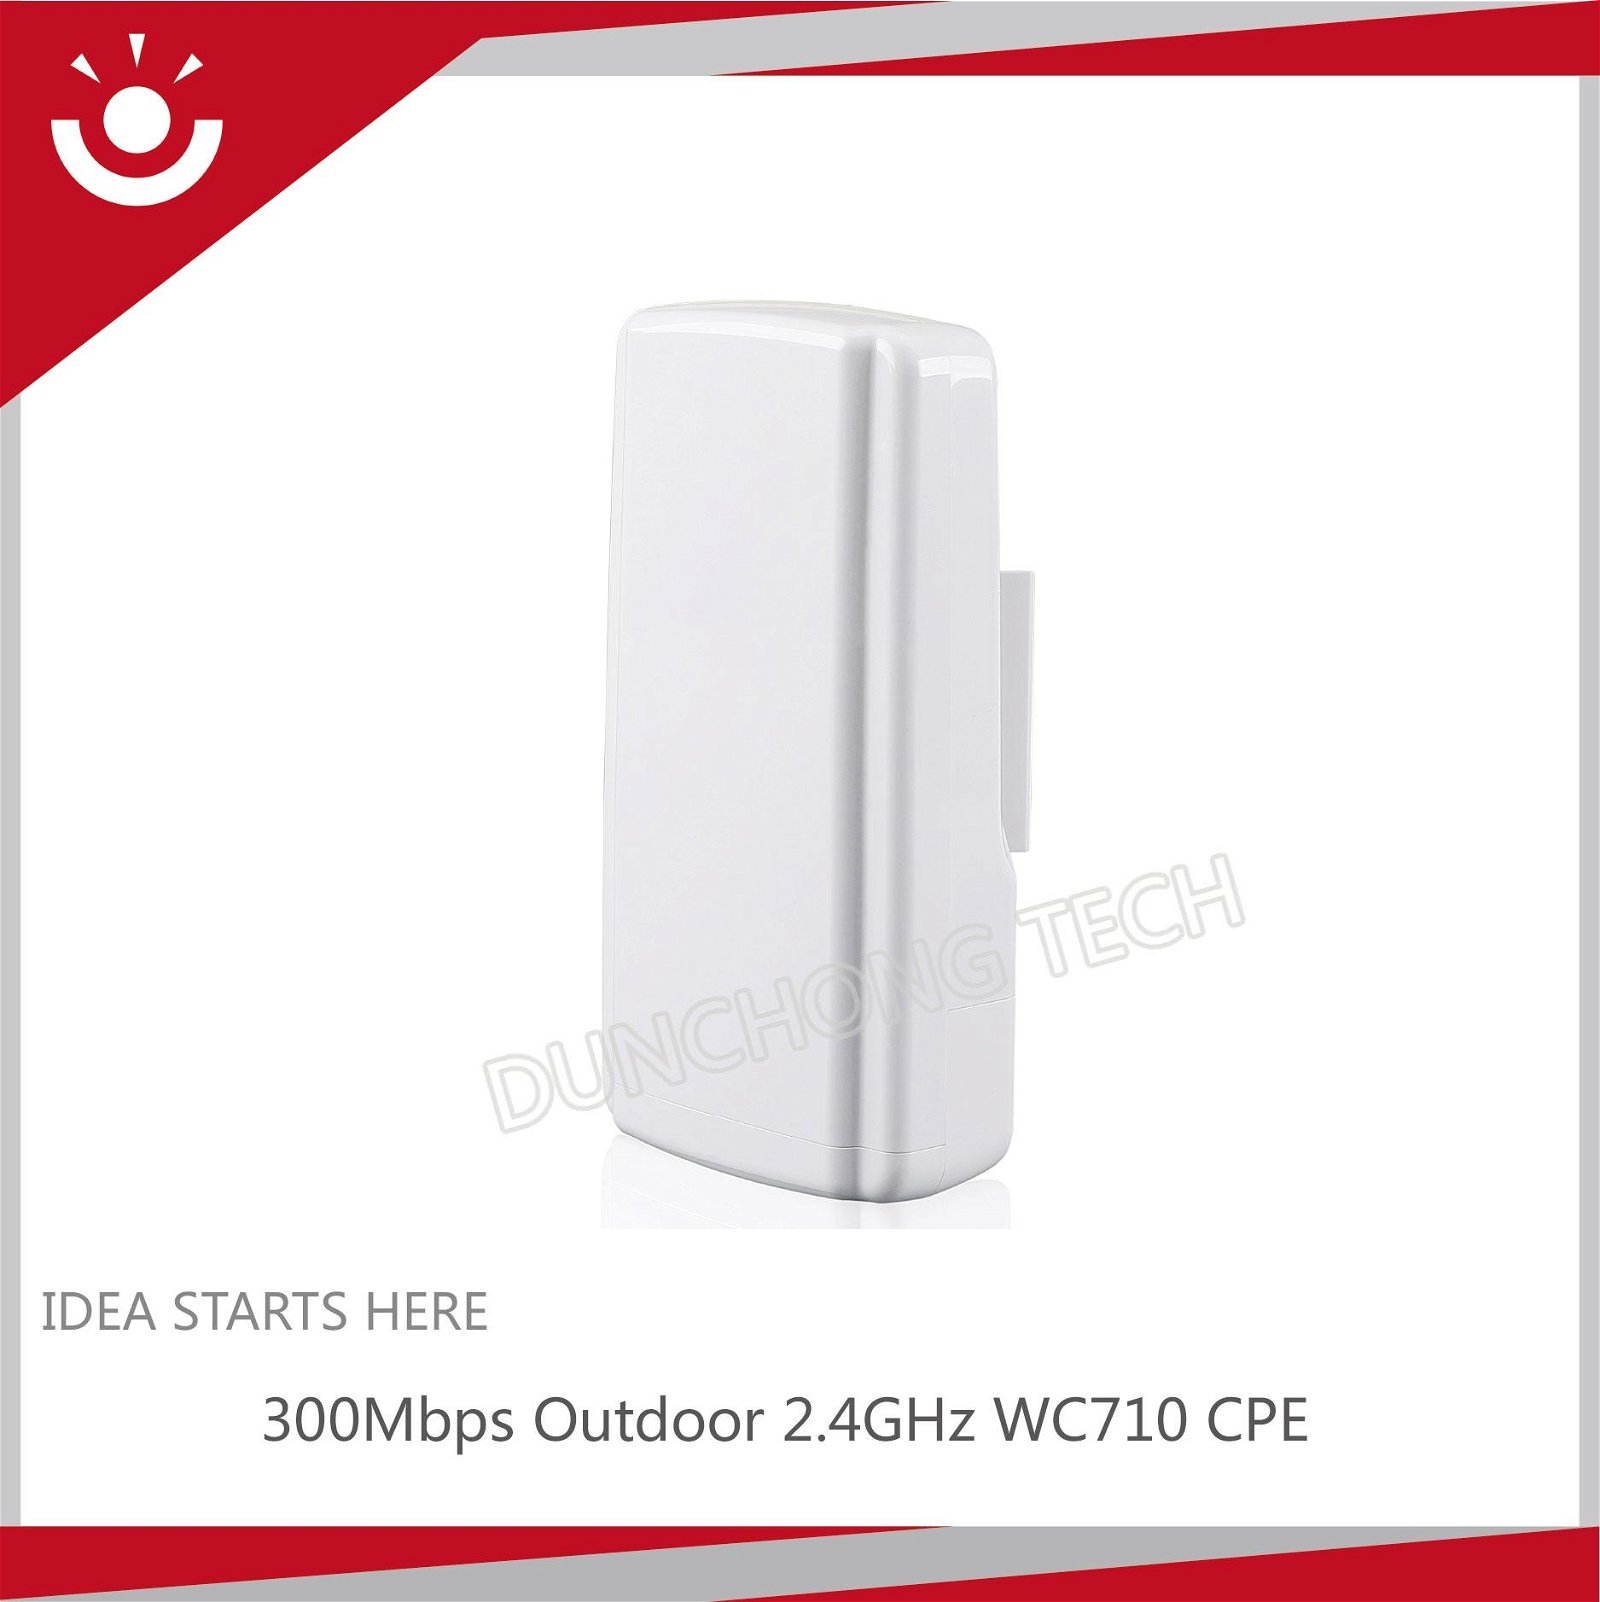 2.4GHz WC710 Outdoor Wireless Access Point CPE Bridge like wireless modem